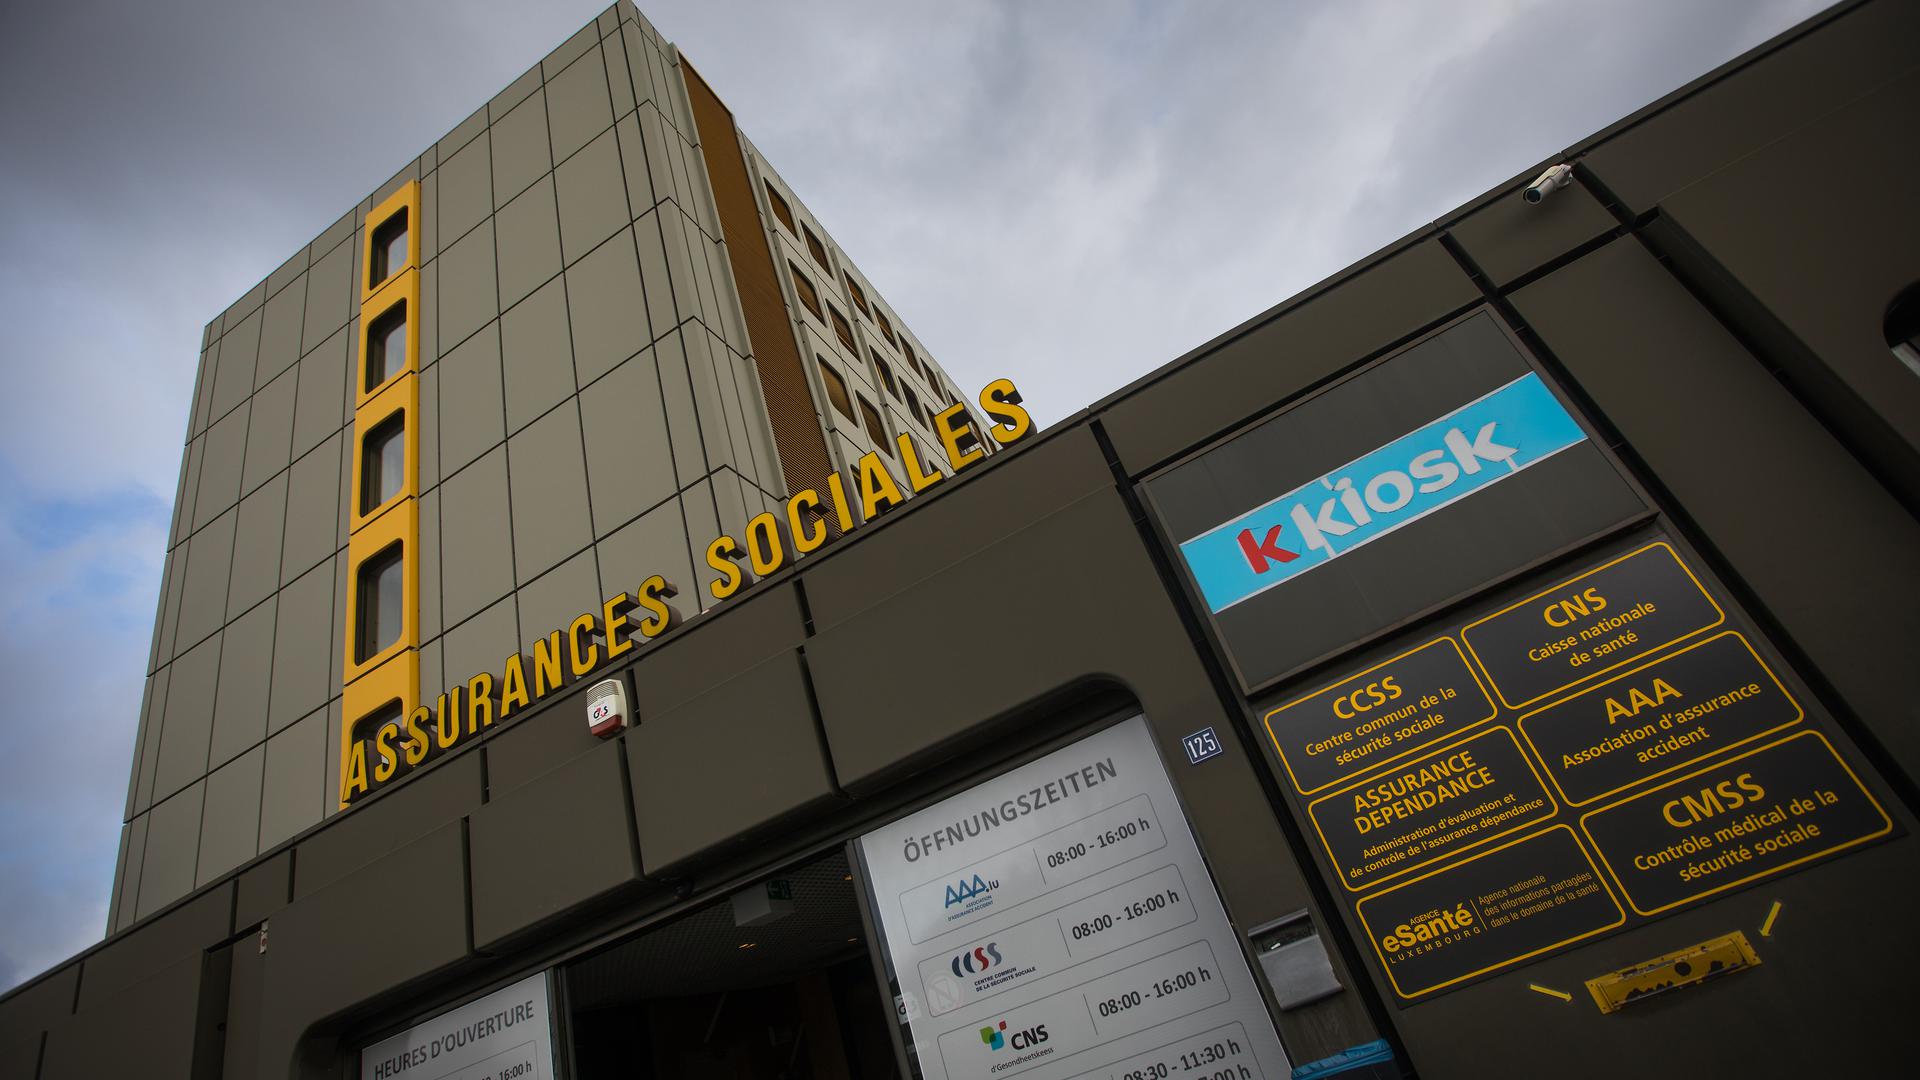 Lokales,CNS,Assurances Sociales,Krankekees. Foto: Gerry Huberty/Luxemburger Wort